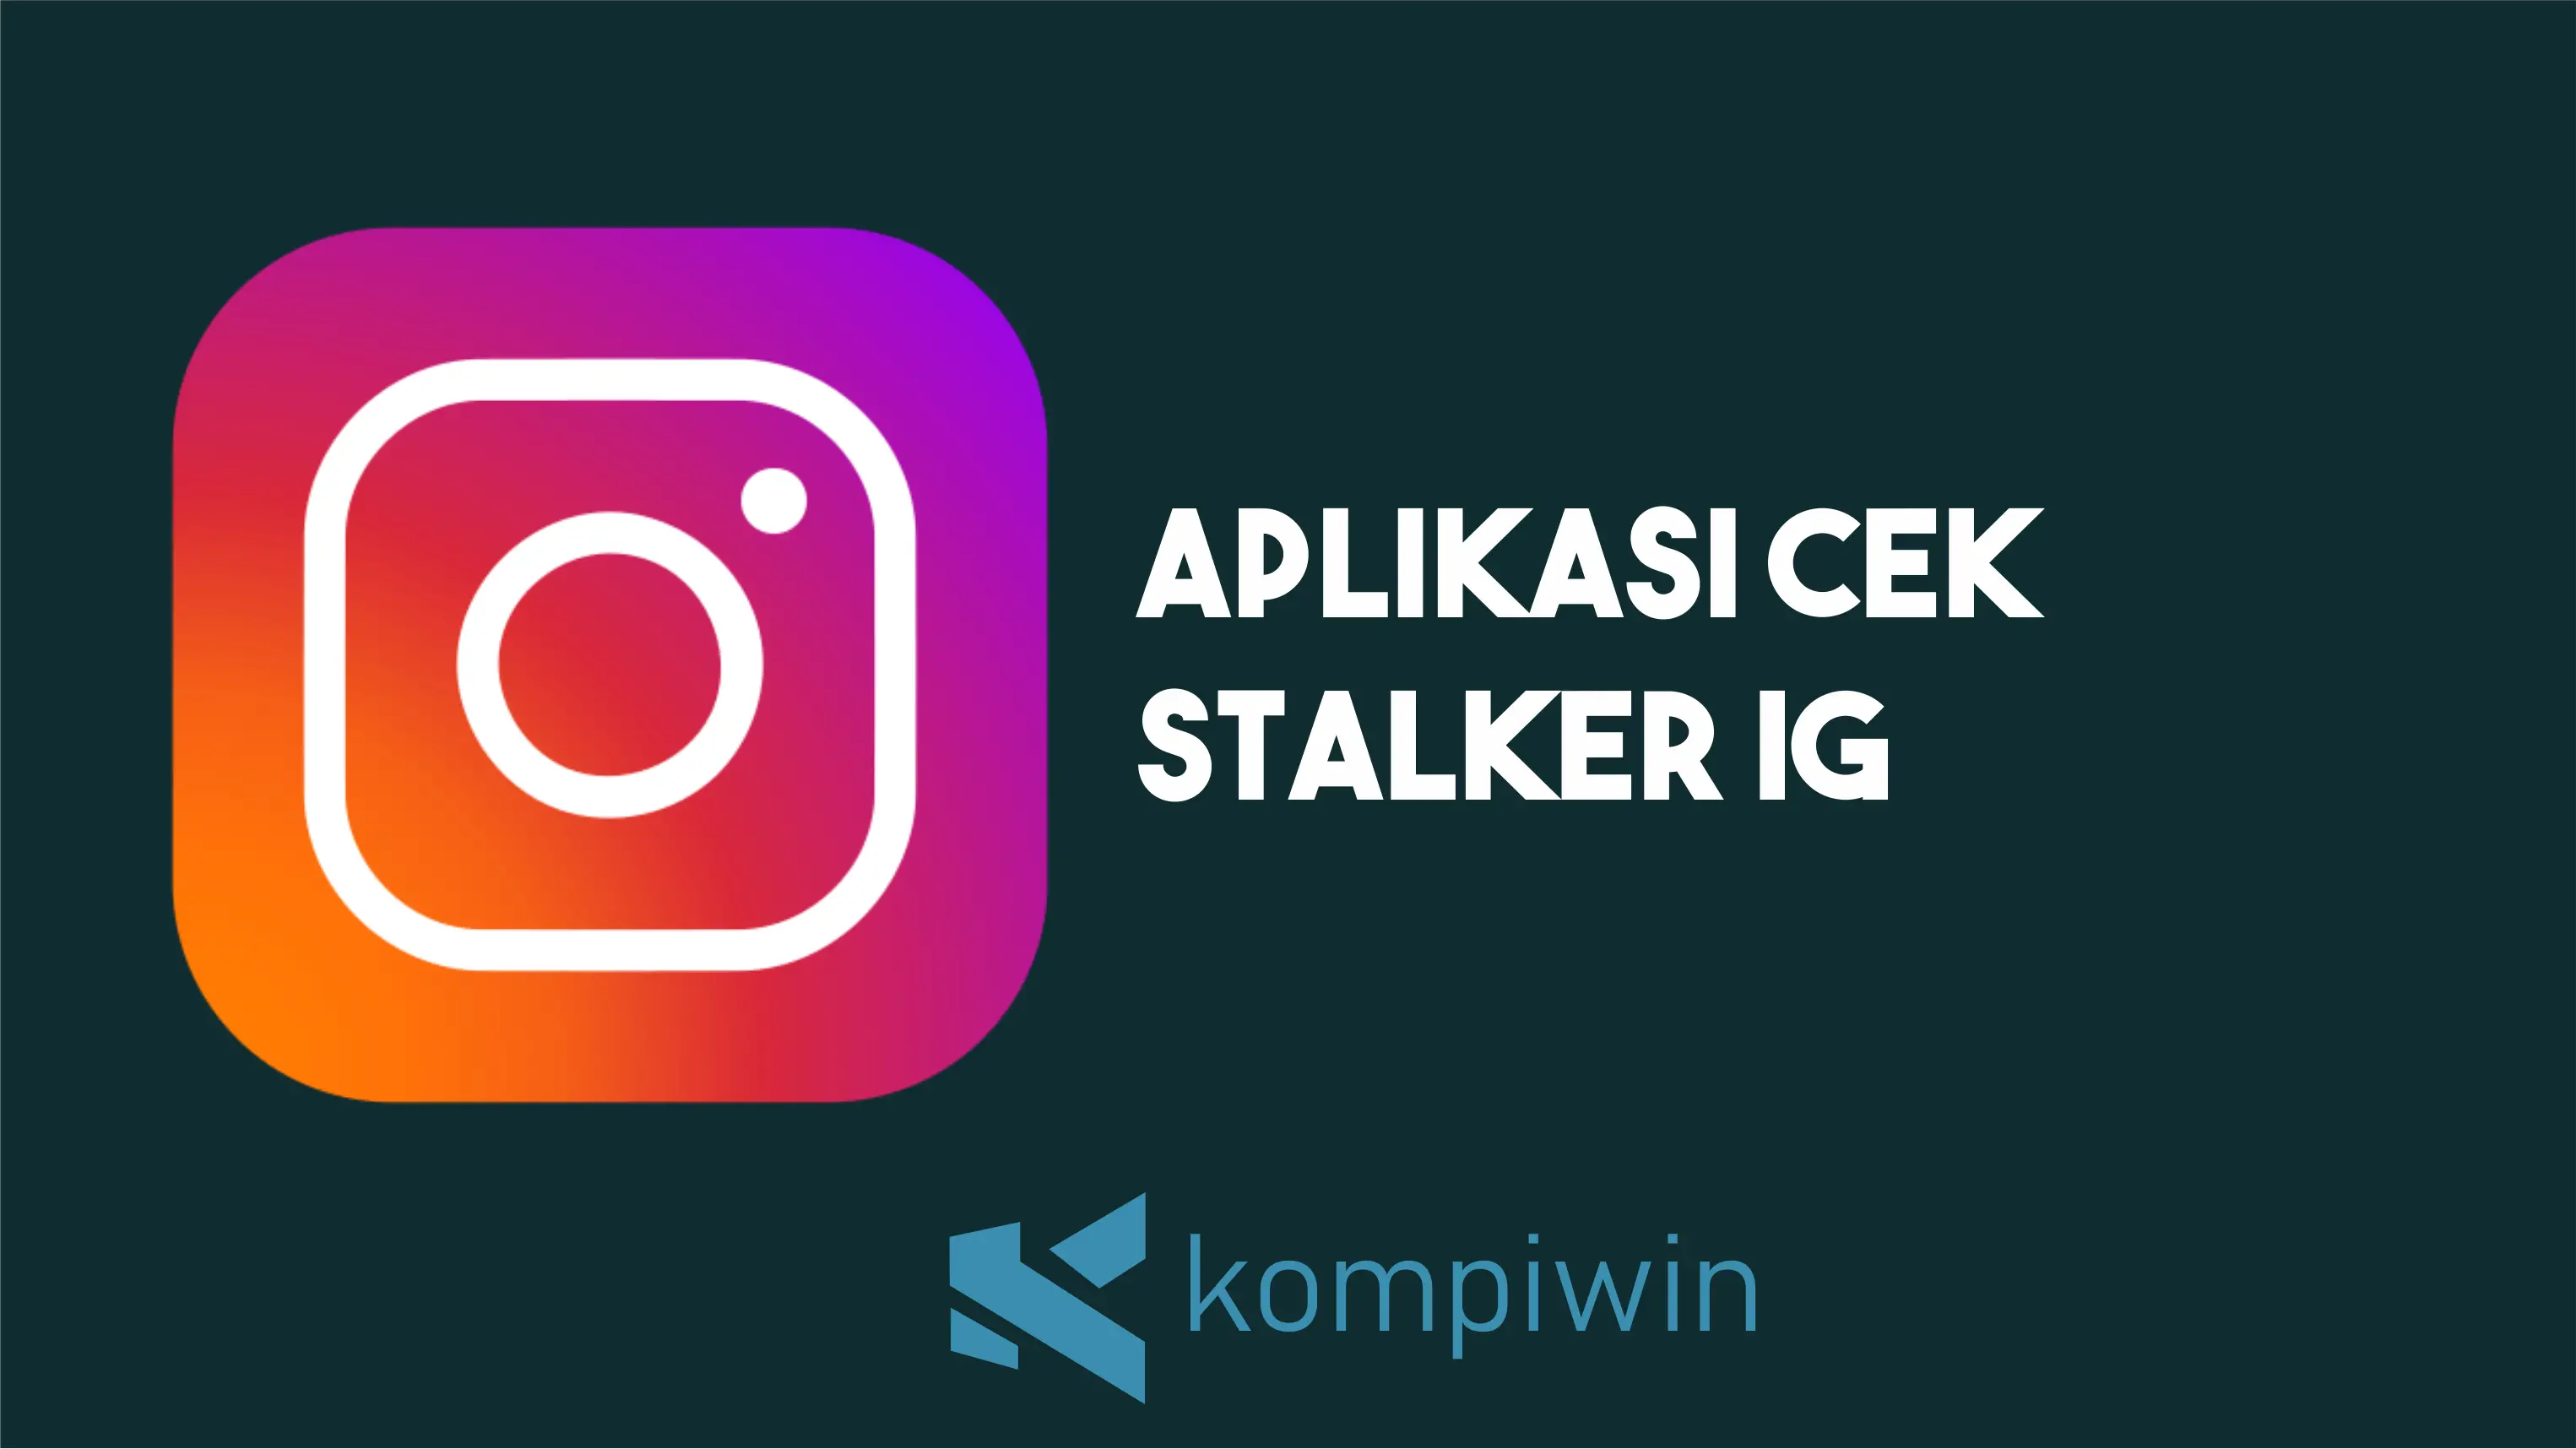 Aplikasi Cek Stalker IG